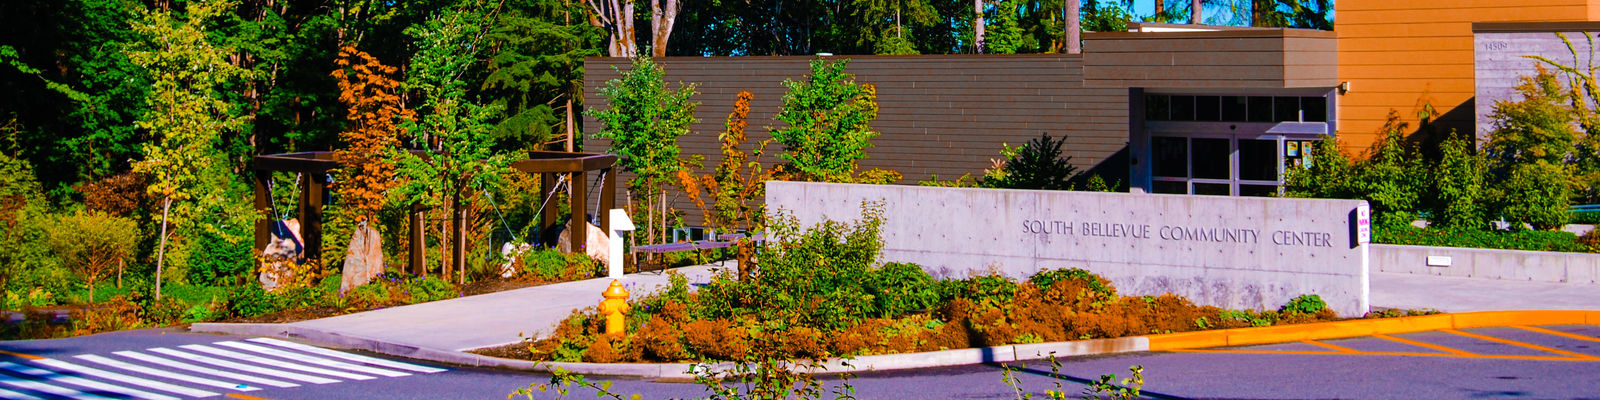 photo of South Bellevue Community Center entrance